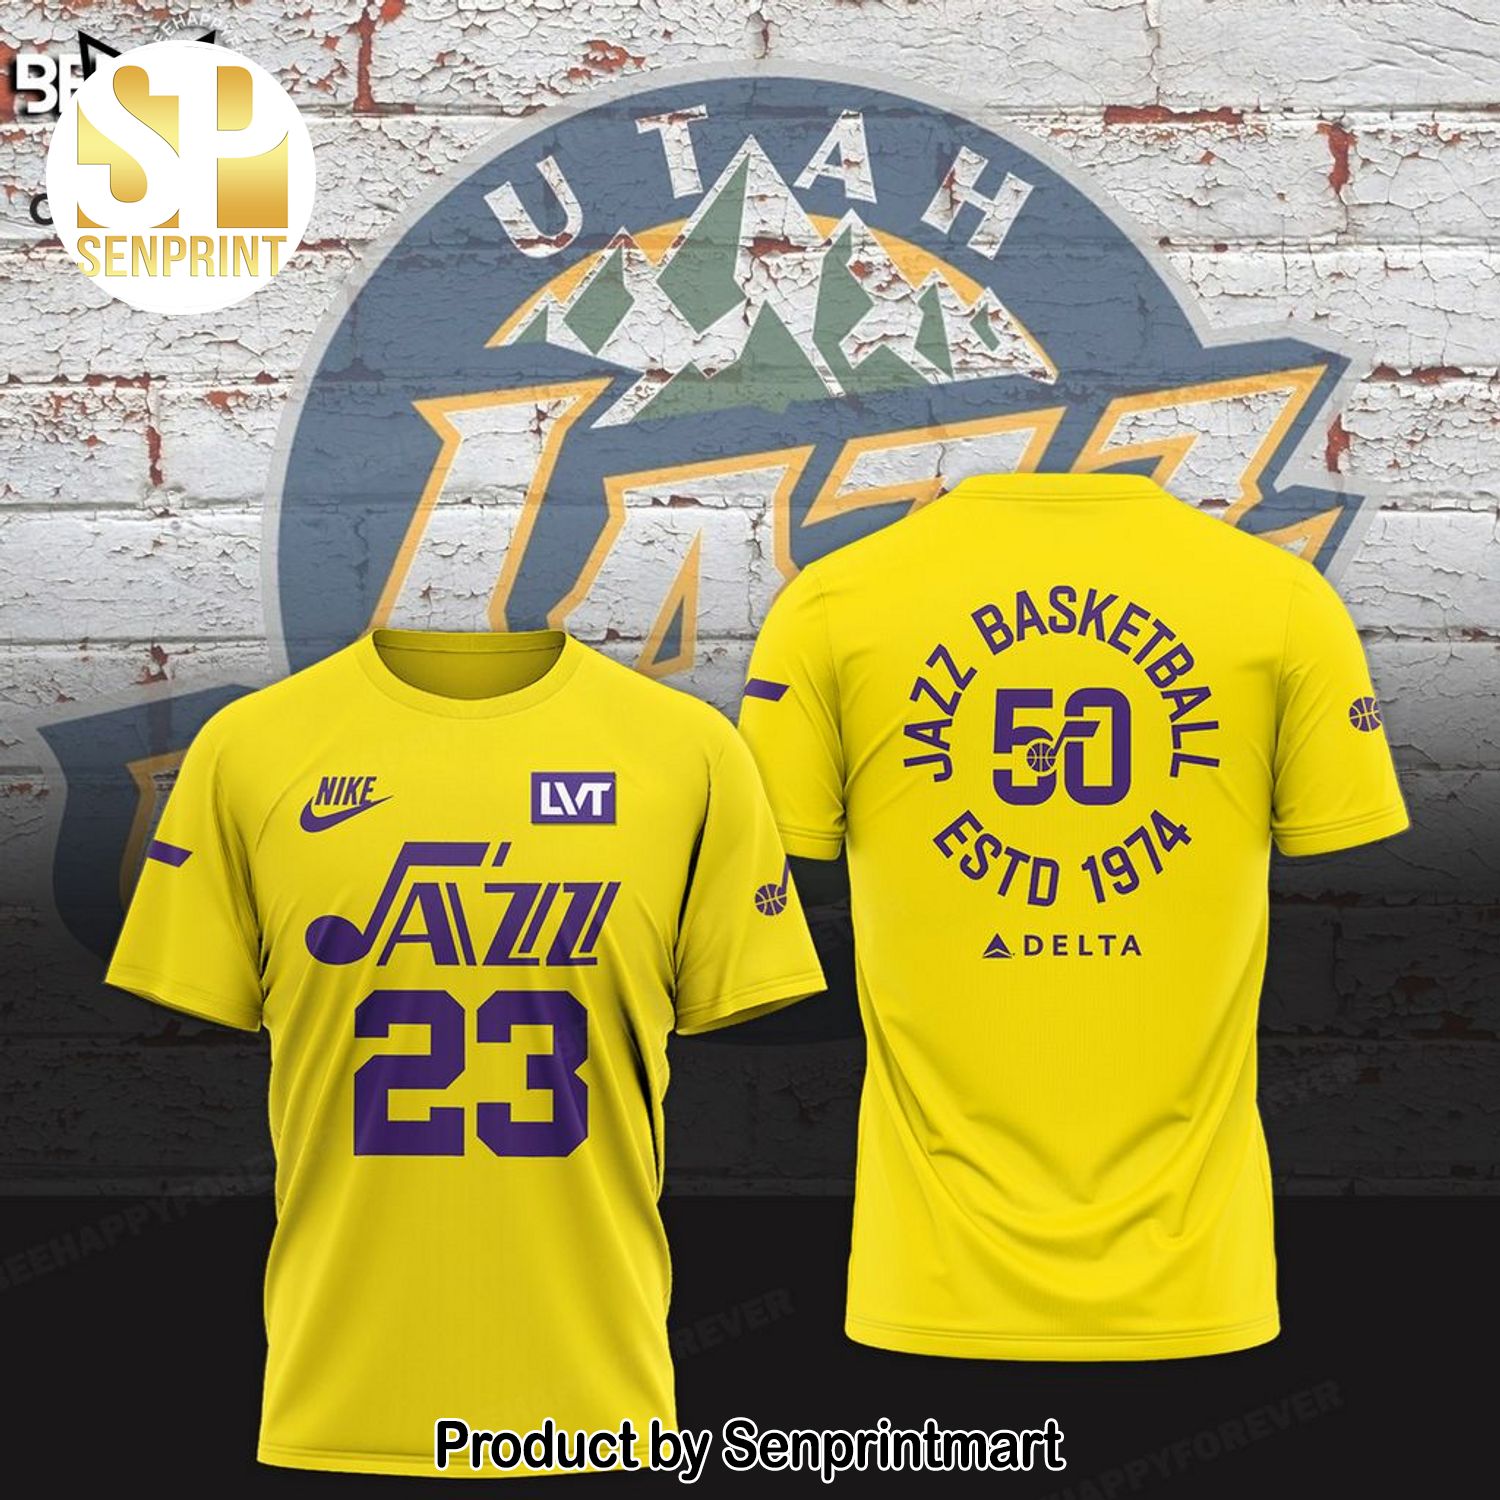 Jazz Basketball 50th Anniversary ESTD 1974 Yellow Design All Over Print Shirt